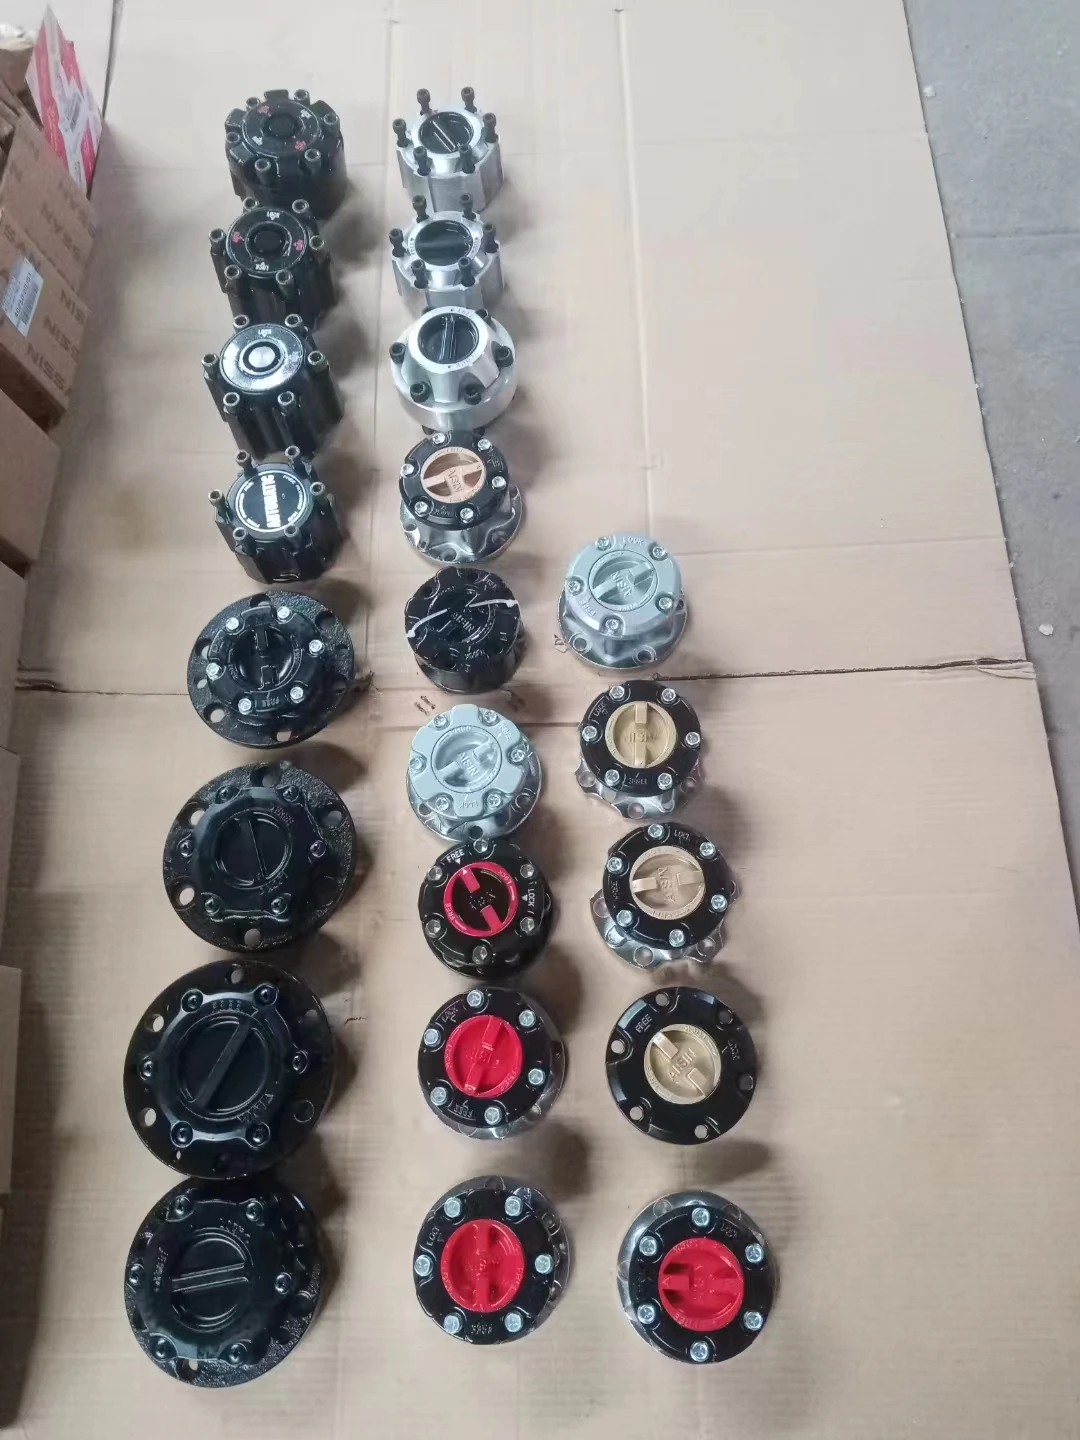 free wheel hubs for mazda bongo s234-33-205 s23433205 lock hub 